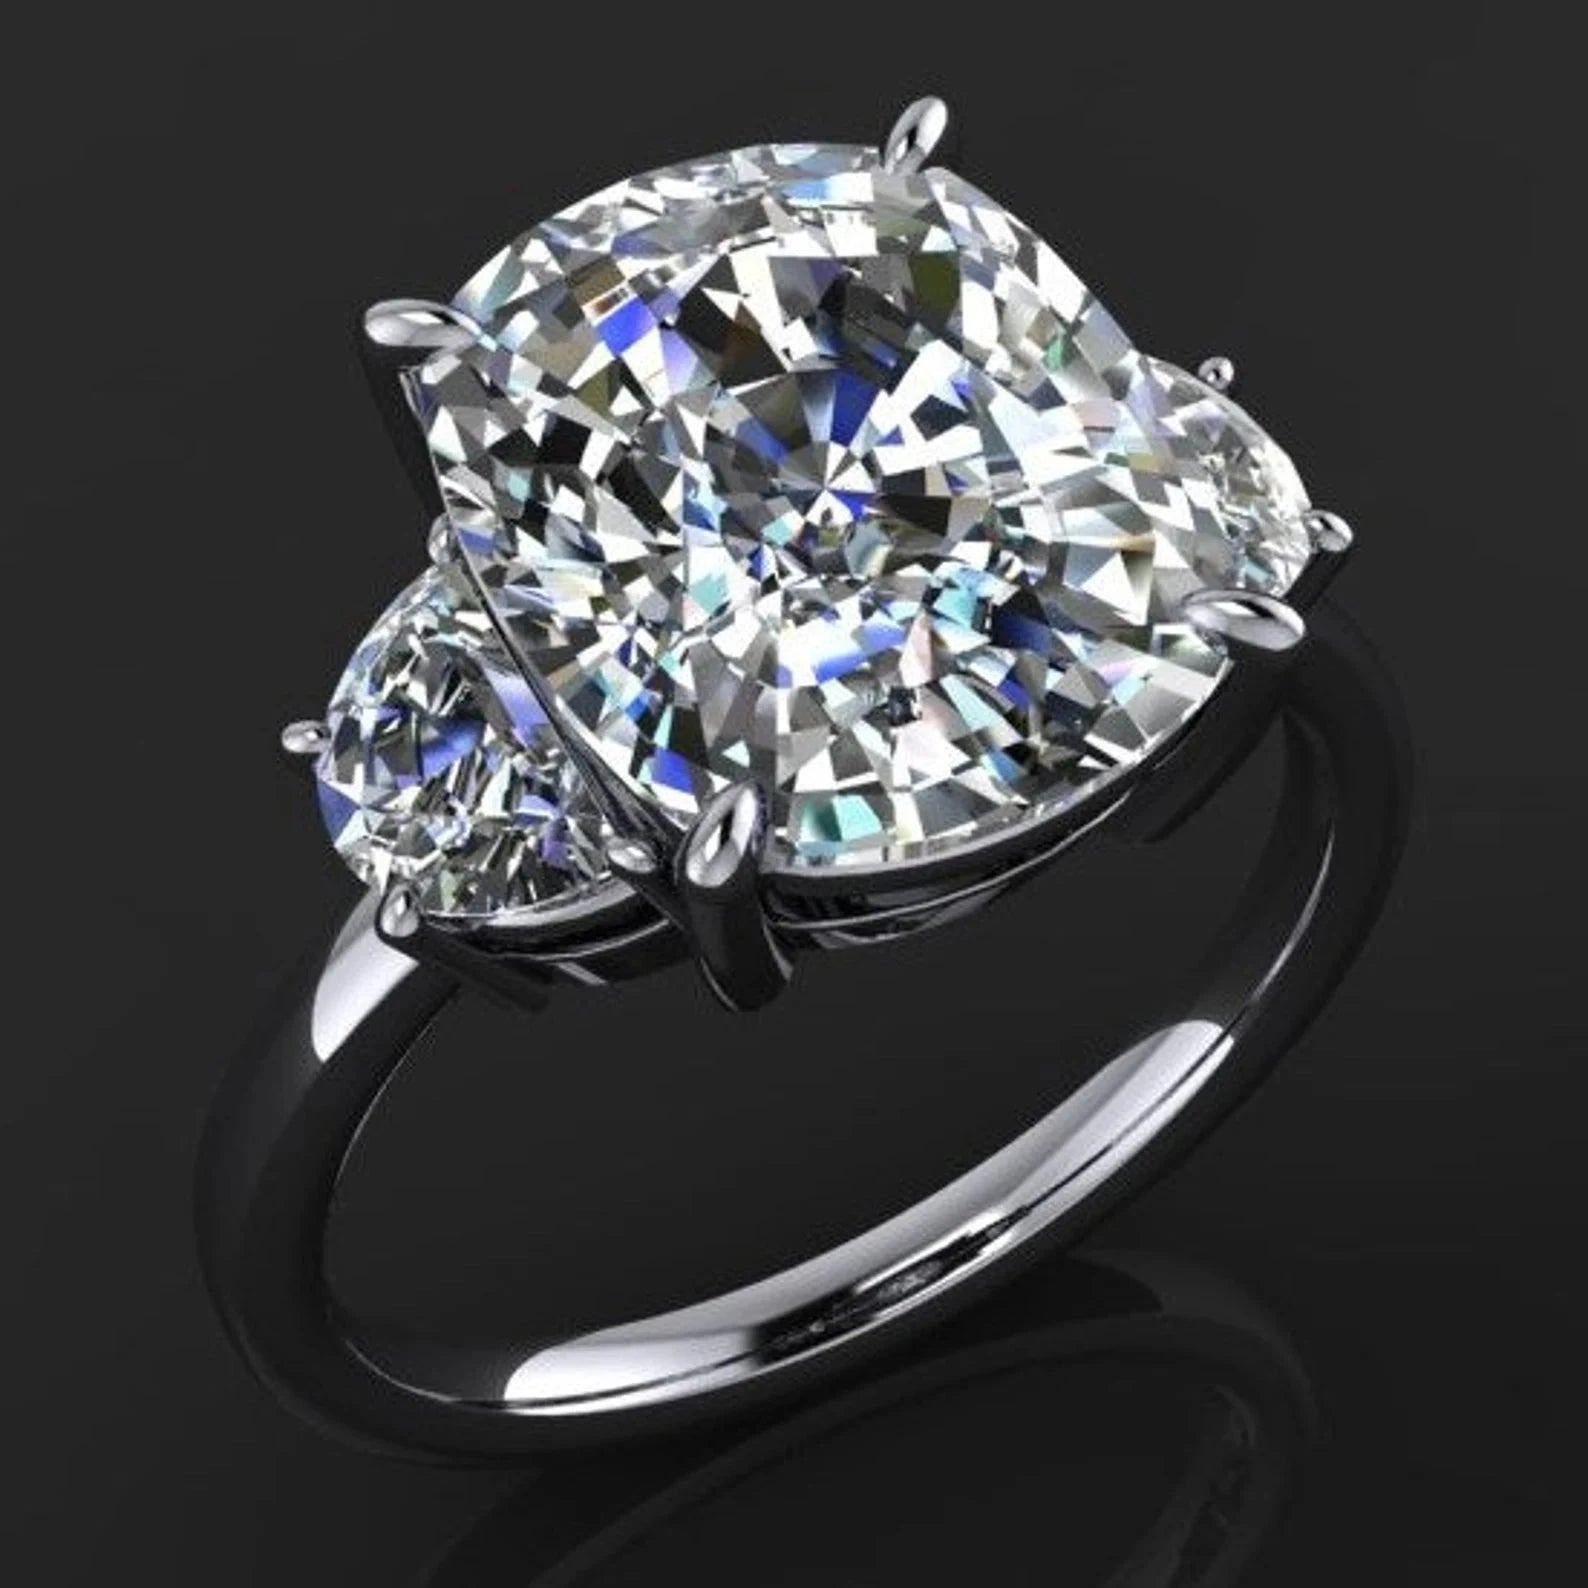 demi ring - three stone elongated cushion cut ZAYA moissanite engagement ring, half moon side stones - J Hollywood Designs